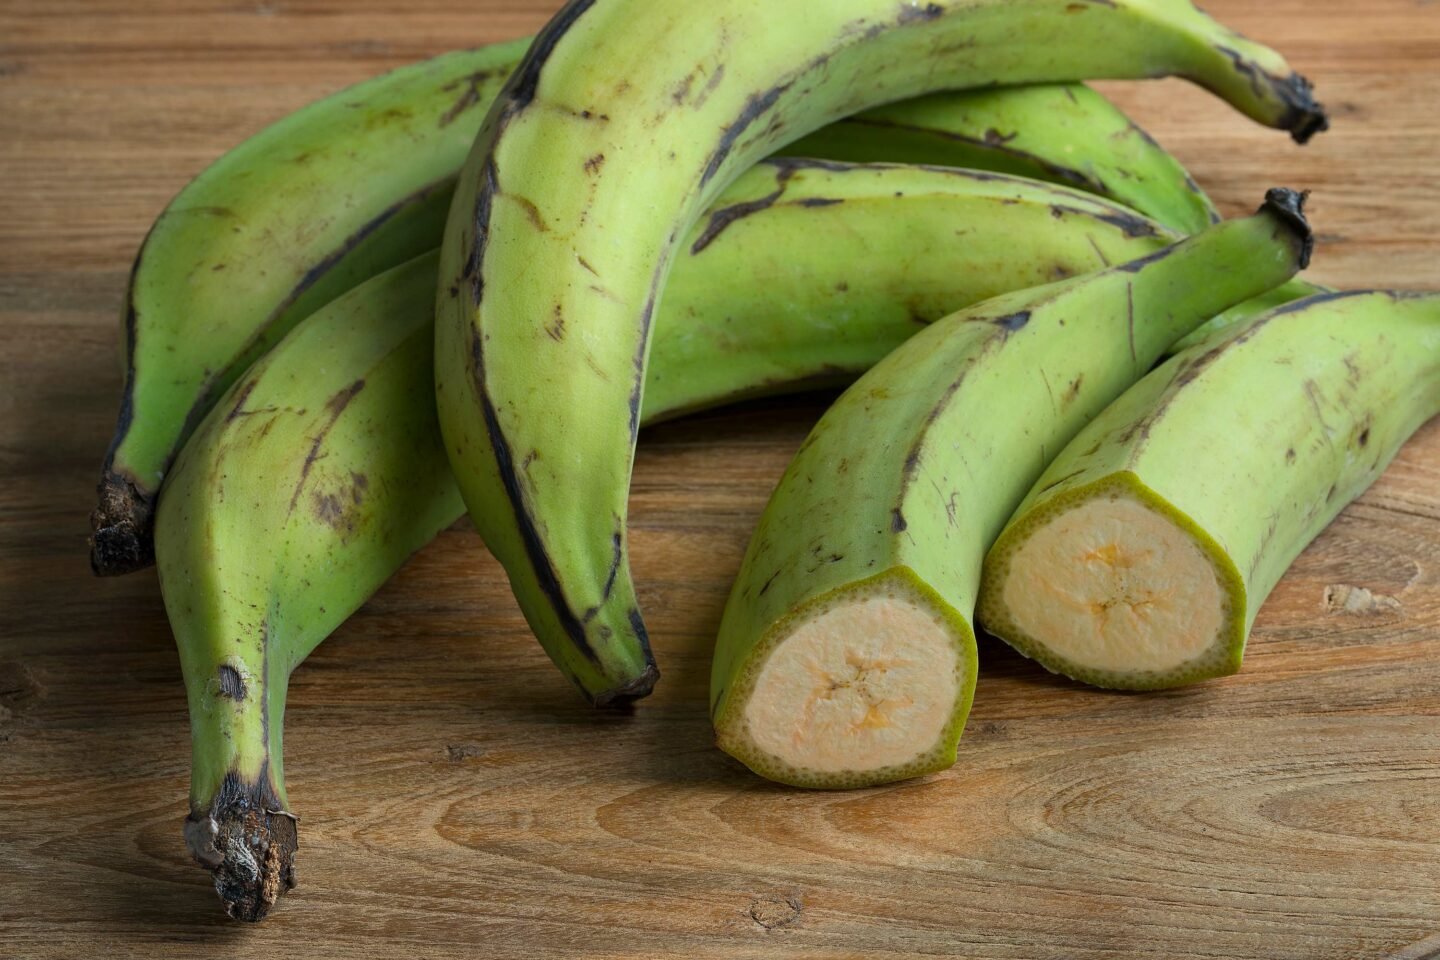 whole and half green unripe bananas